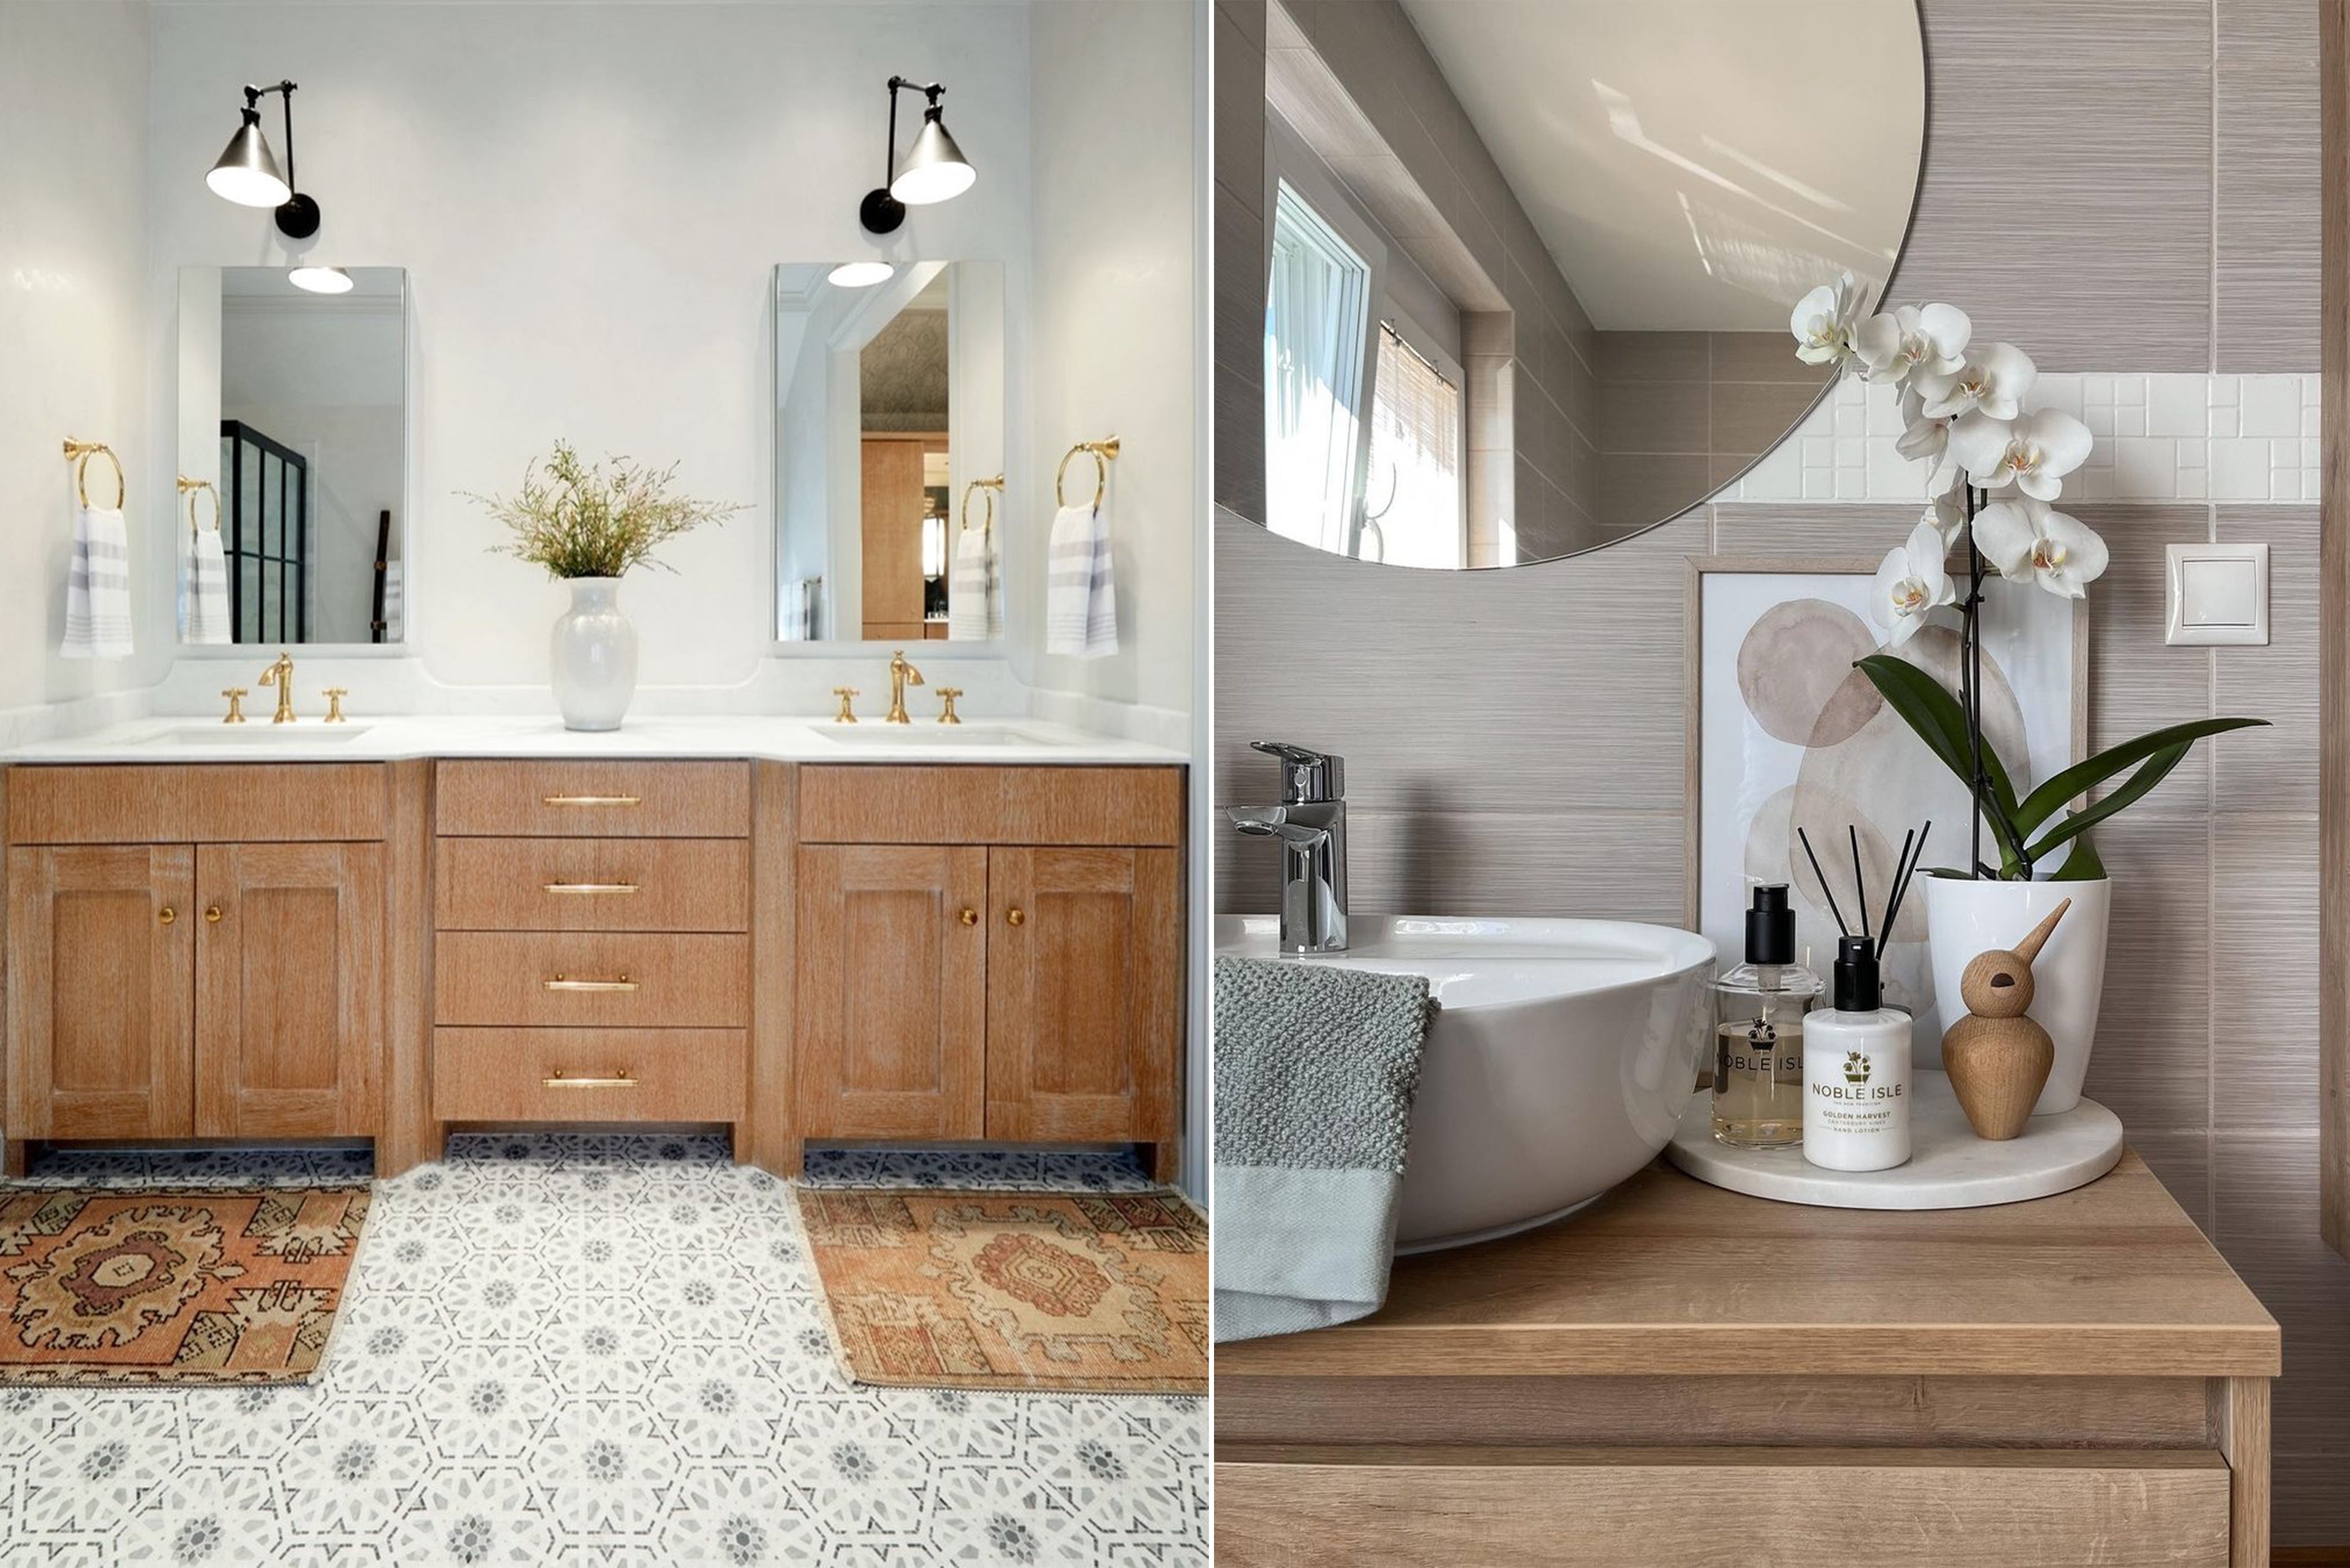 Inspirational decorate a bathroom counter #bathroomideas #remodel